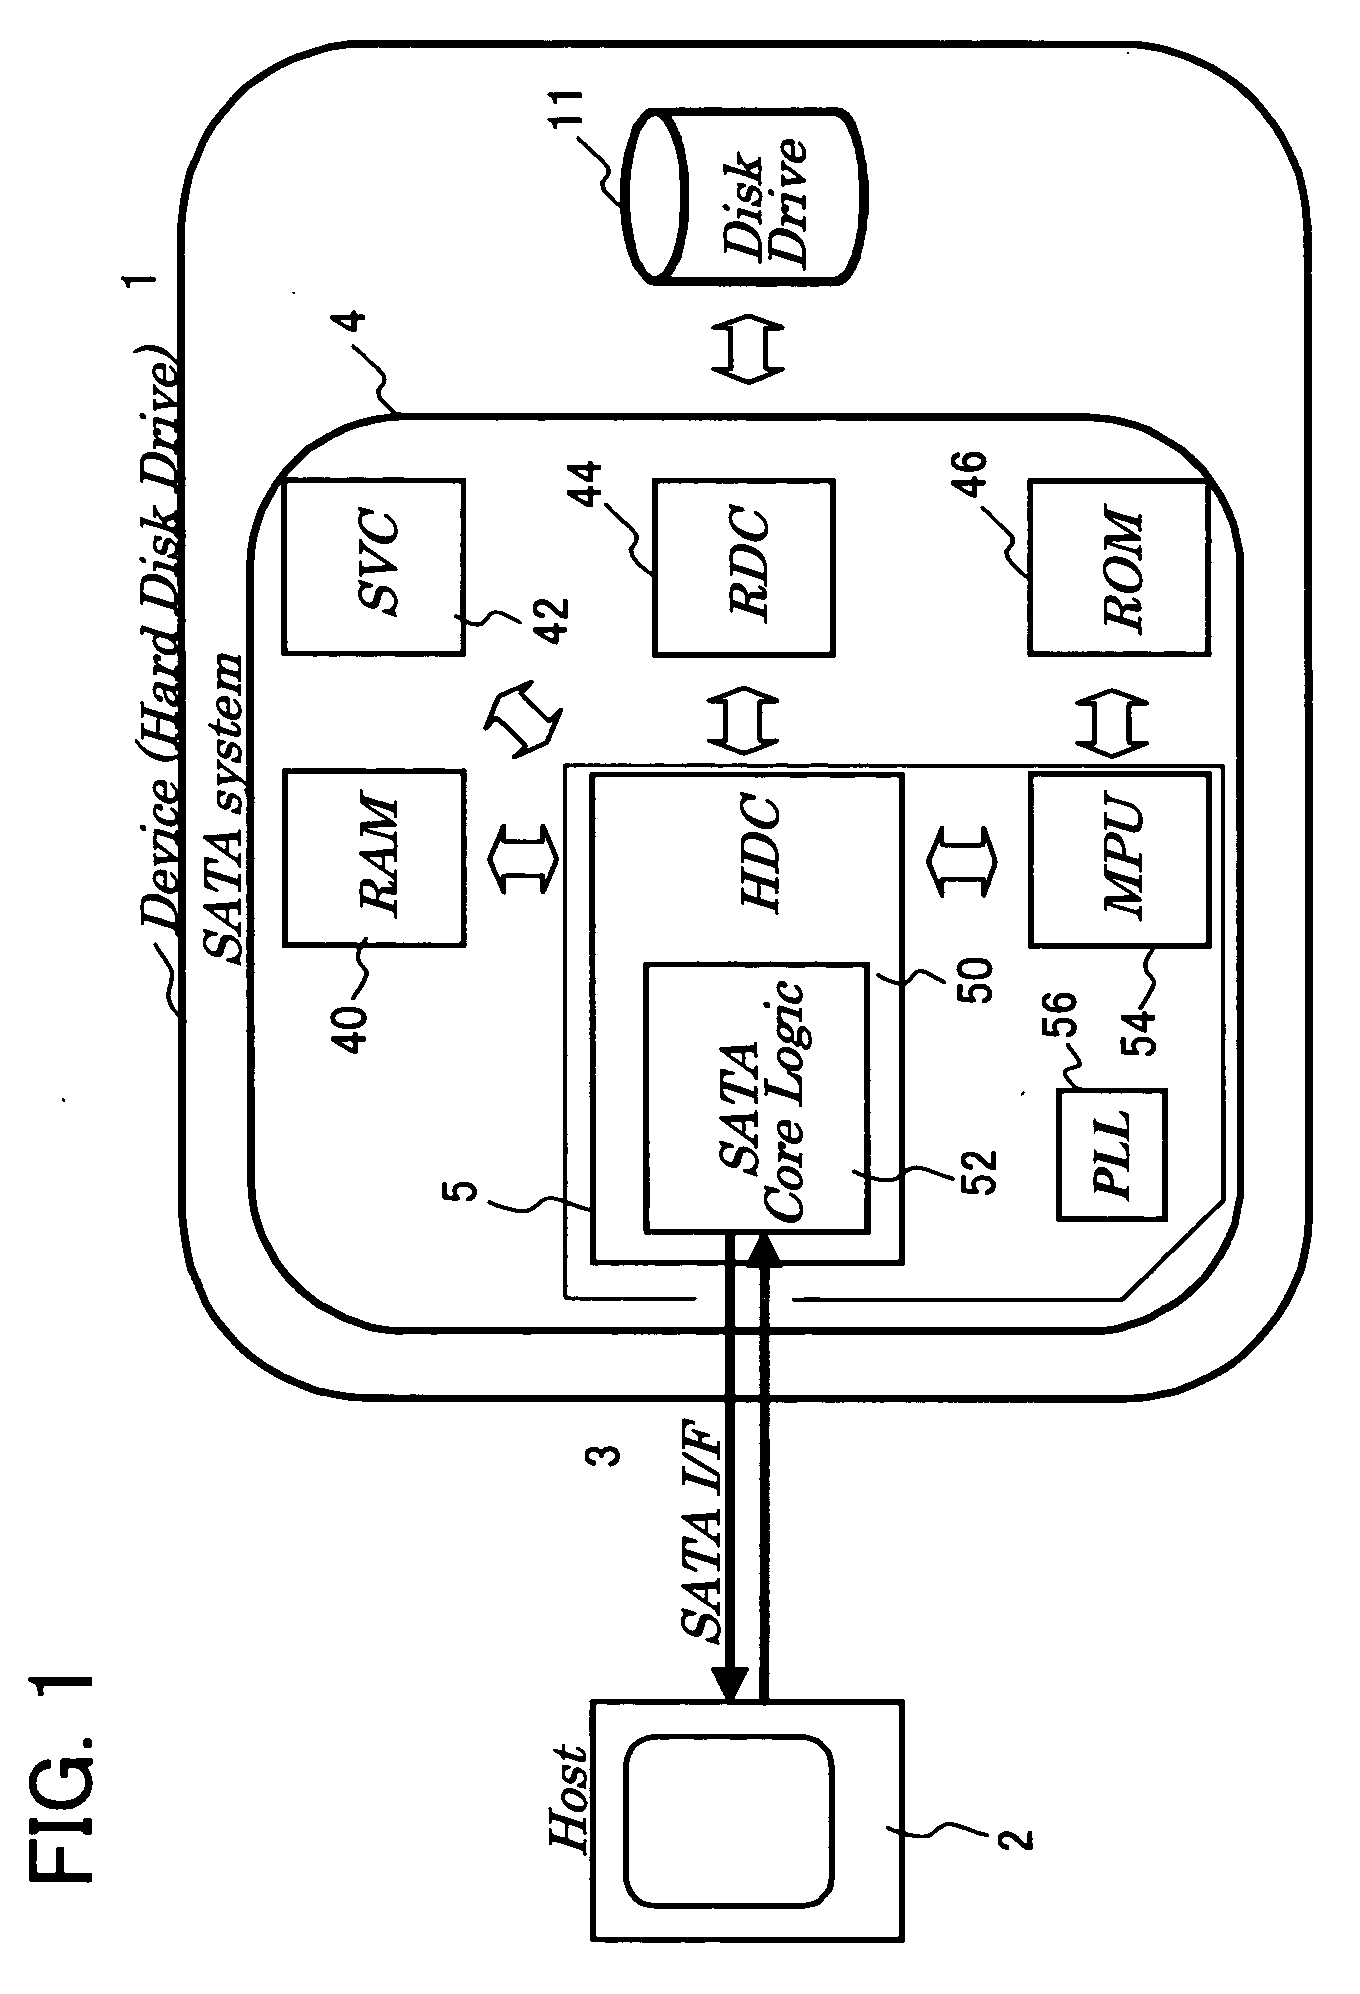 Serial type interface circuit, power saving method thereof, and device having serial interface